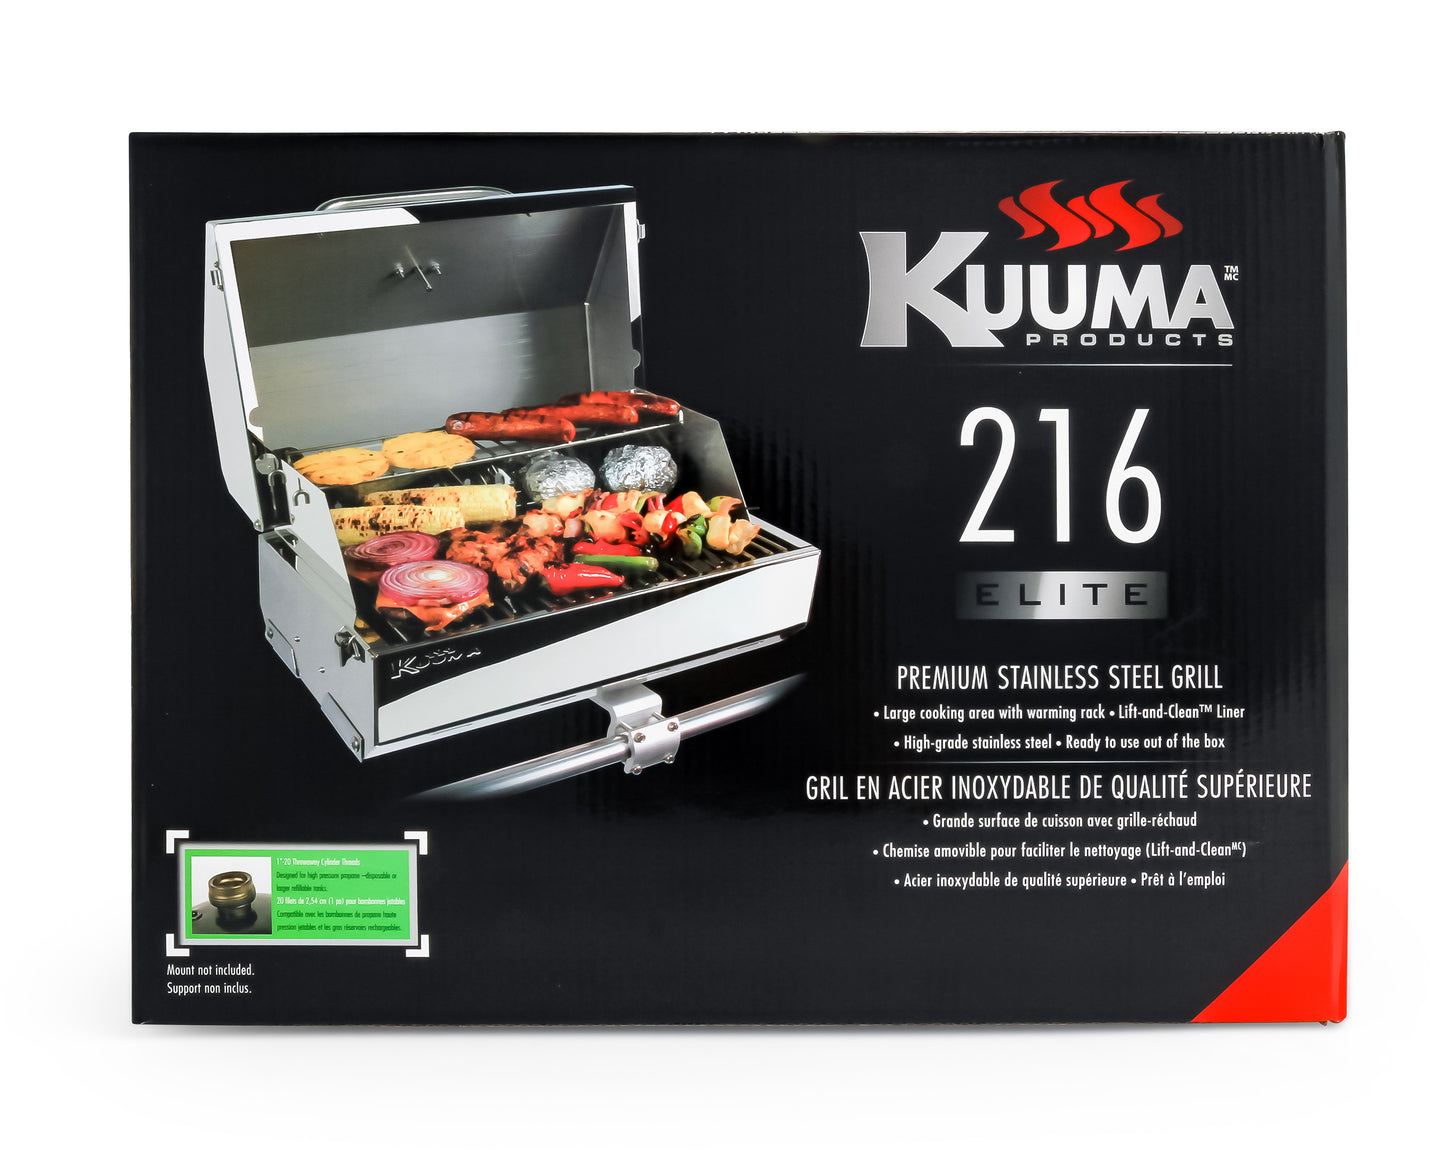 Kuuma Elite 216 Marine Gas Grill for Boats